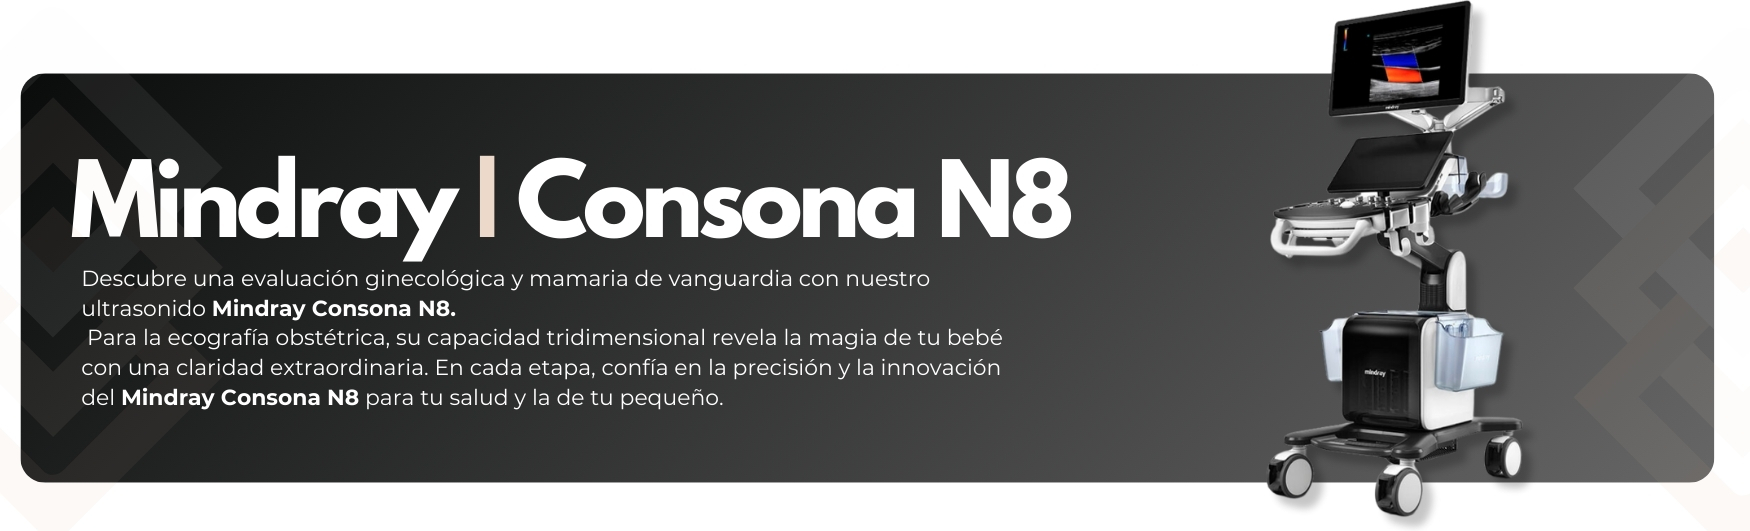 banner consona n8